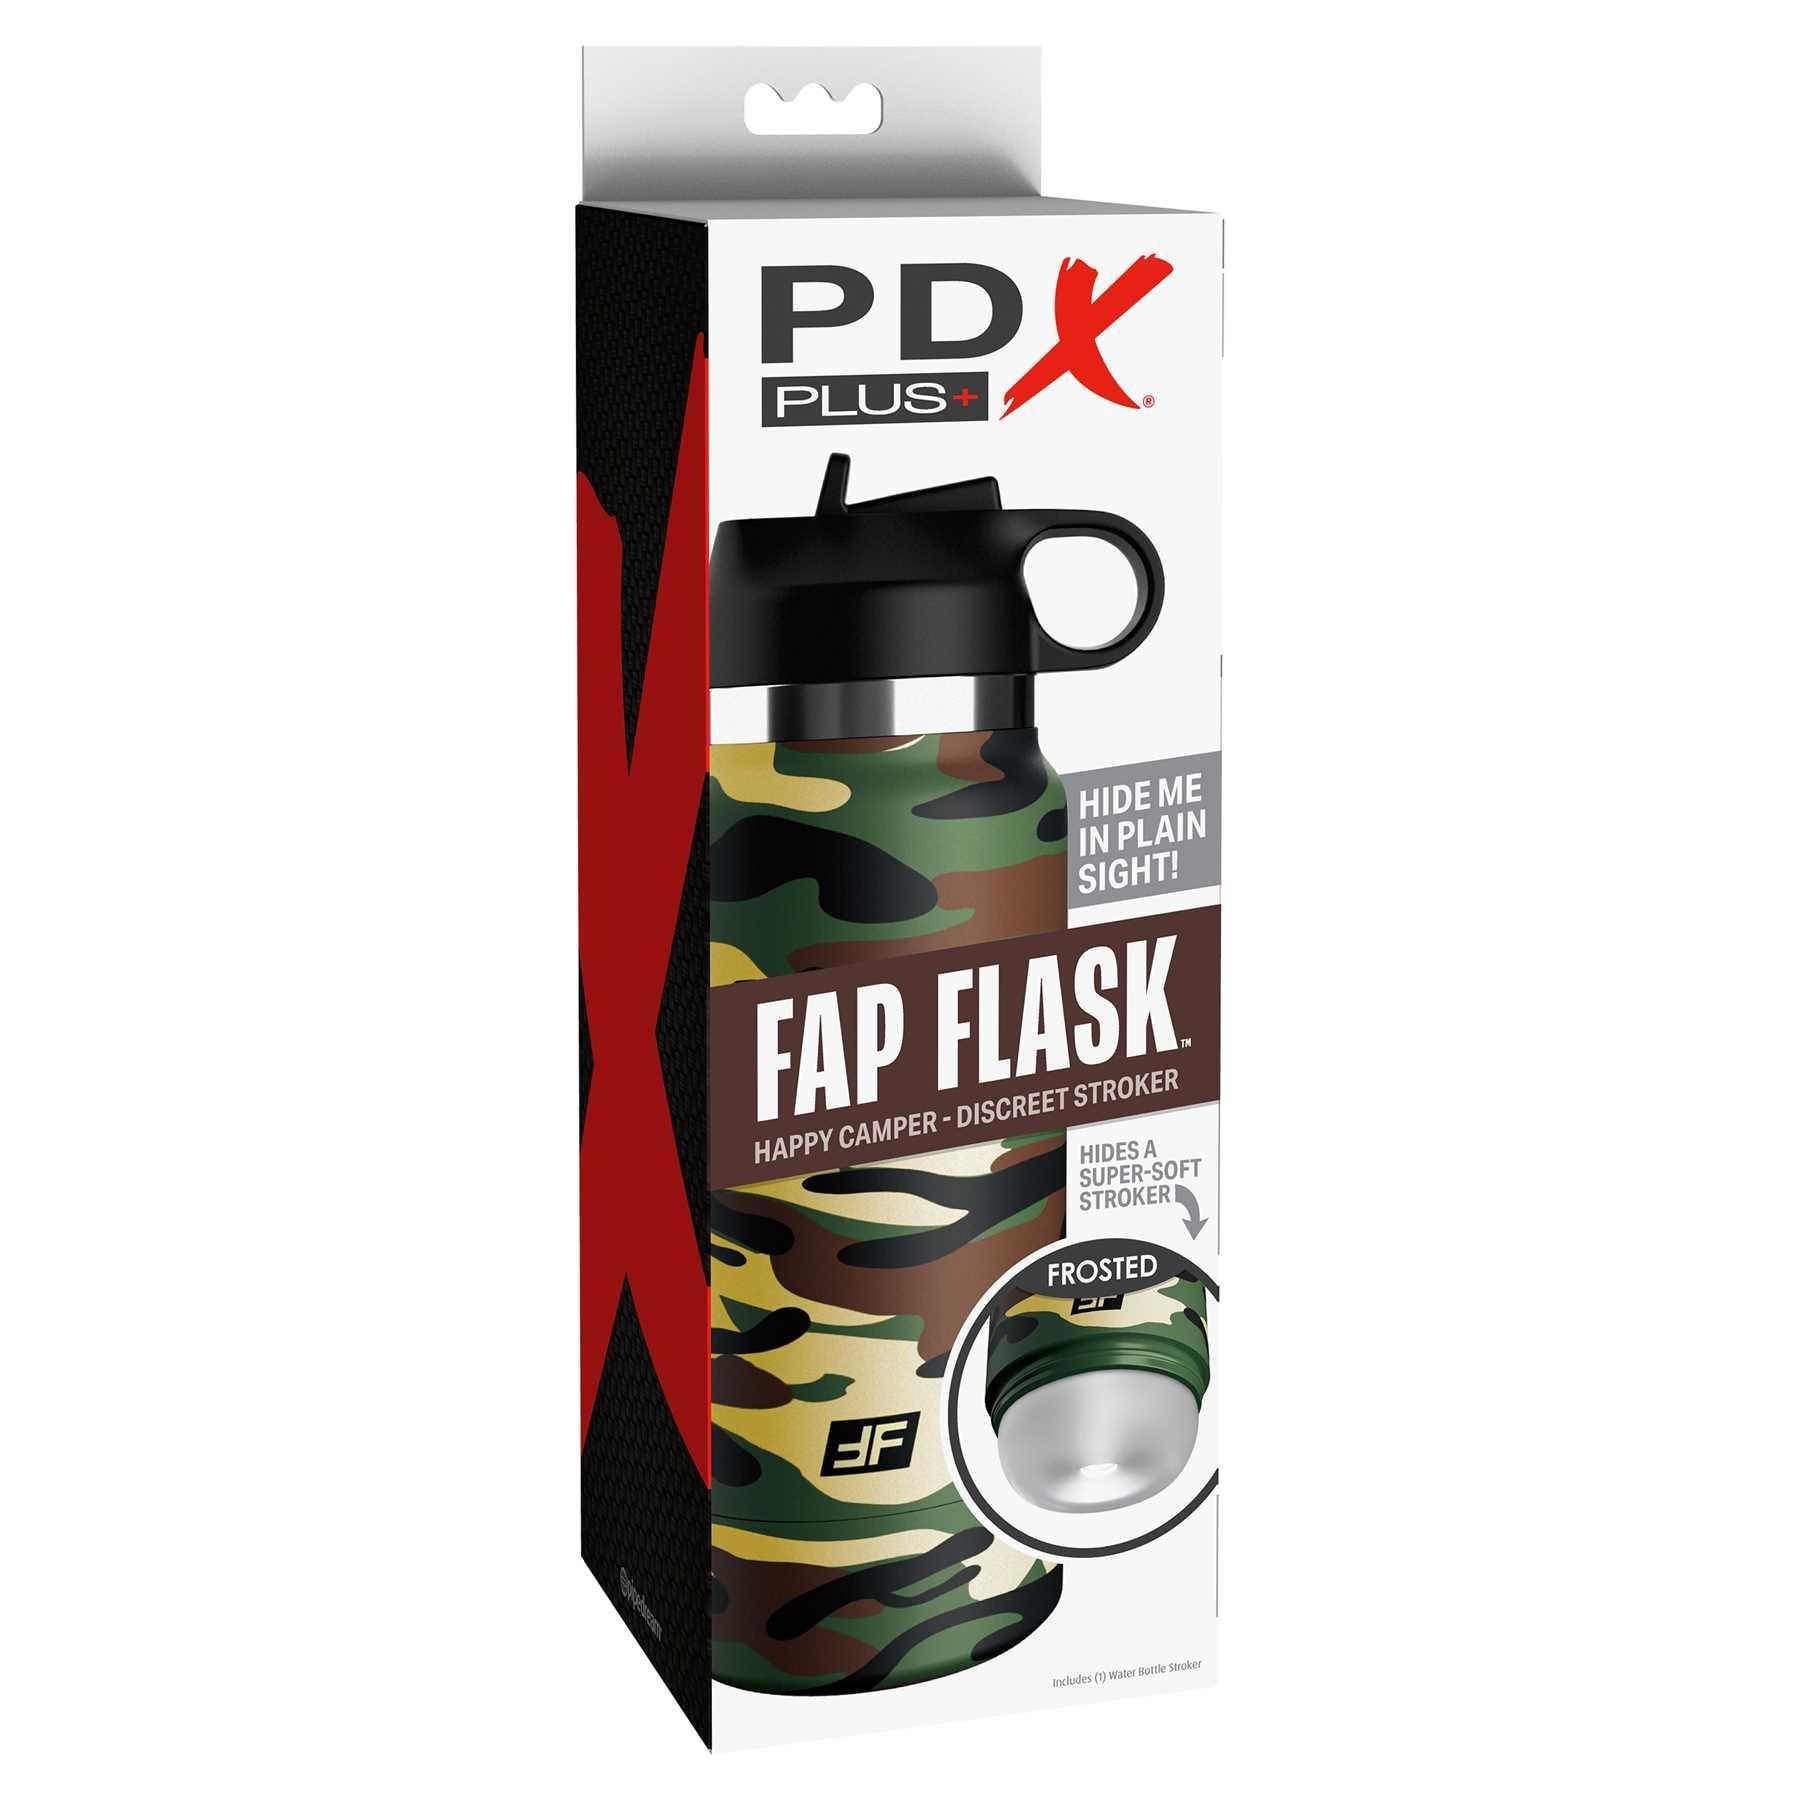 PDX Plus Fap Flask Stroker - Happy Camper box